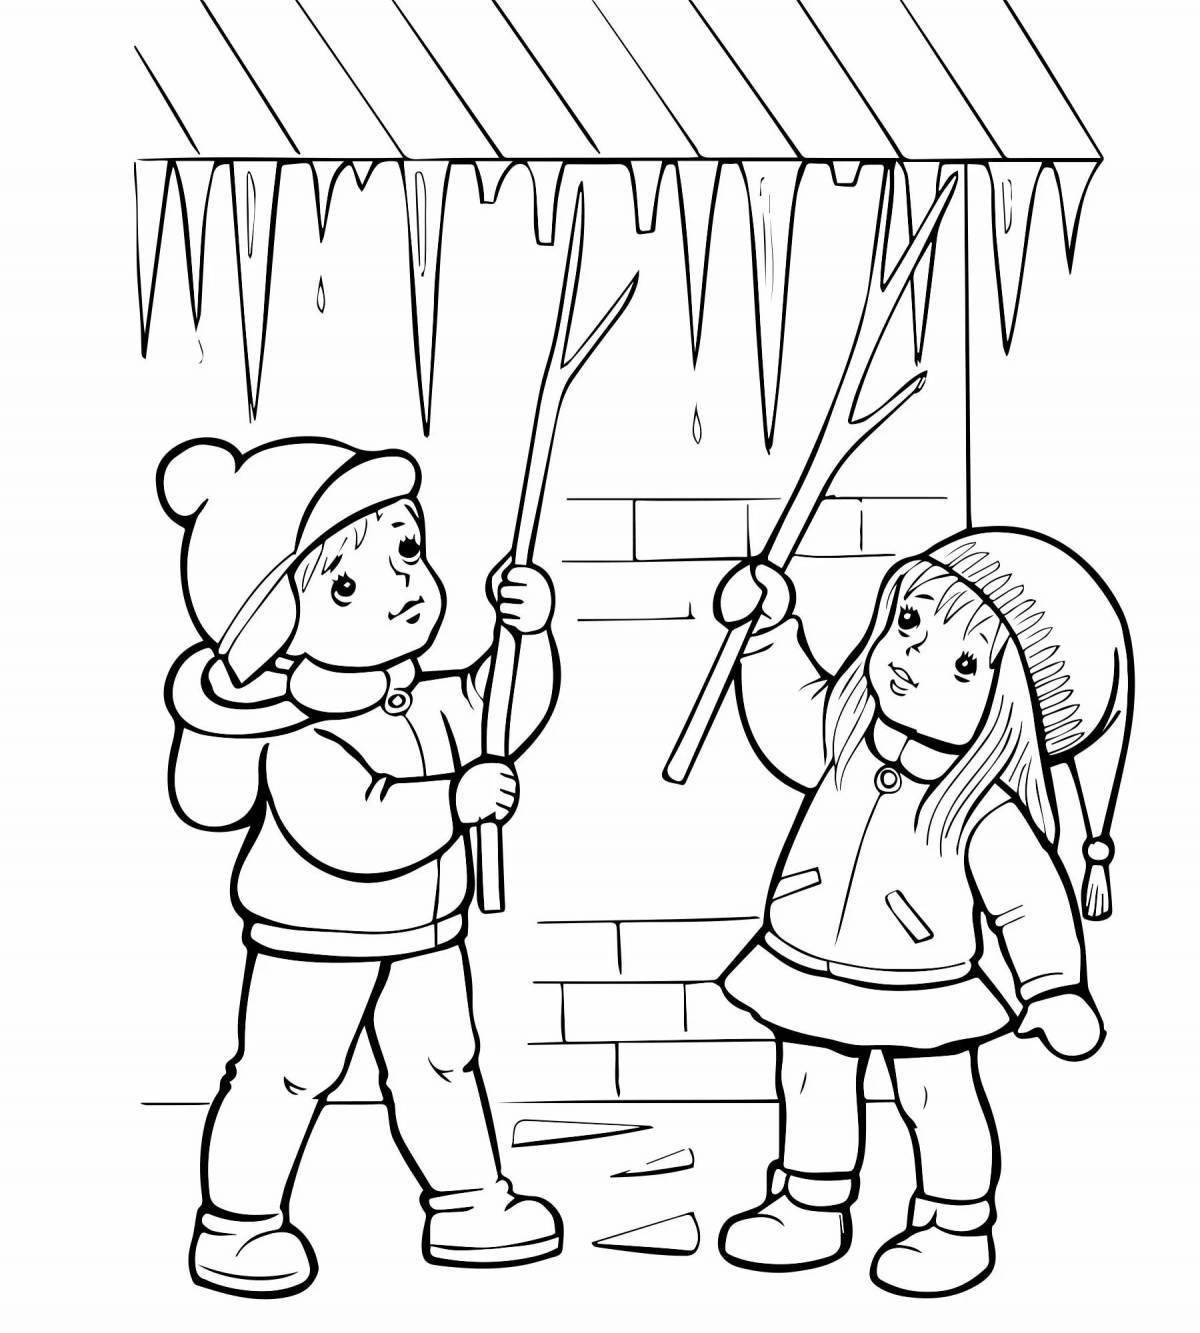 Preschool winter safety #1